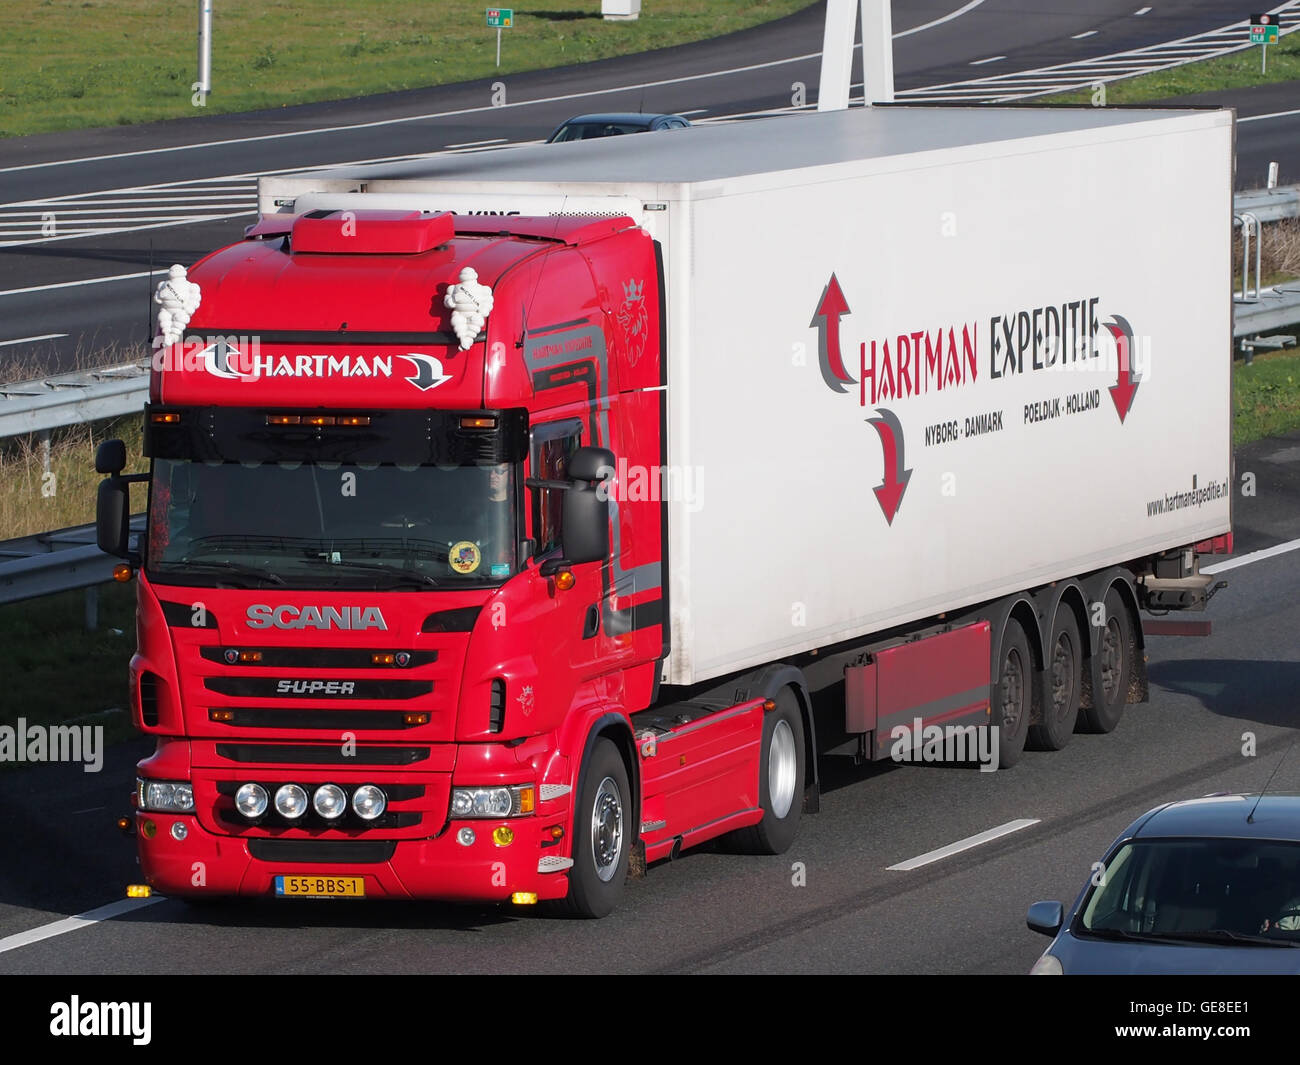 Super Scania, Hartman Expeditie Banque D'Images